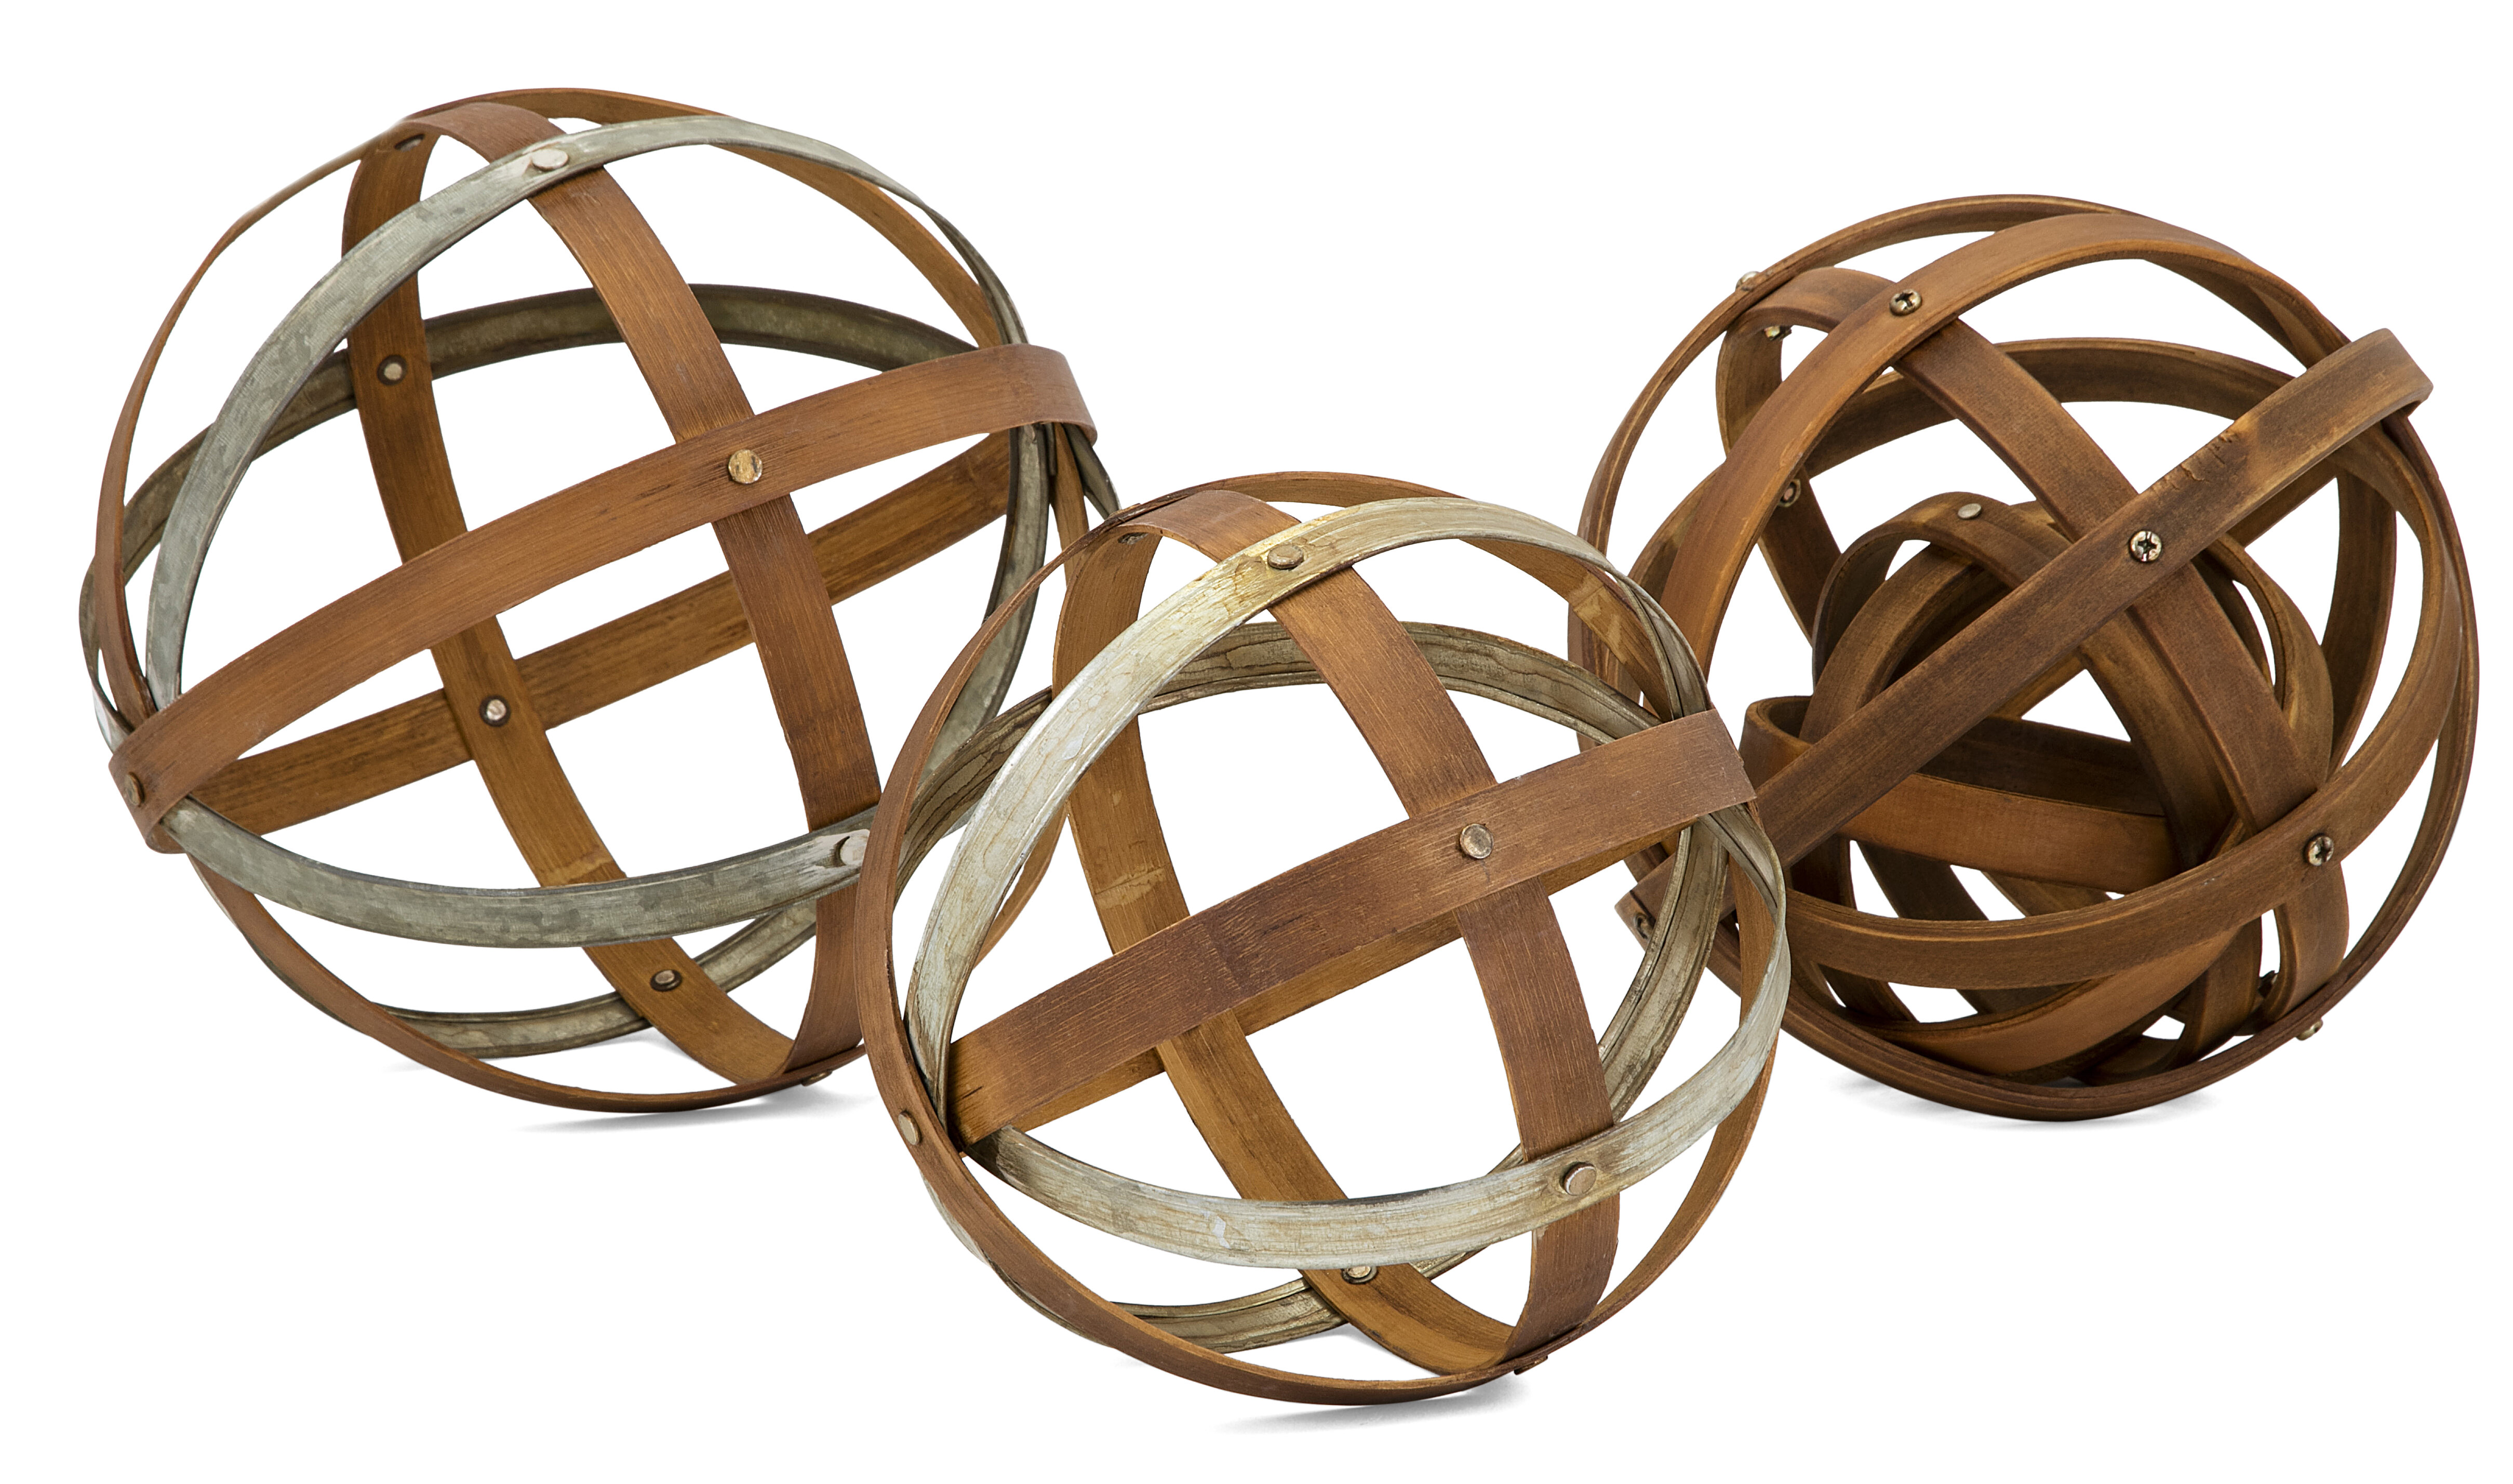 Wood And Metal Spheres 3 Piece Sculpture Set